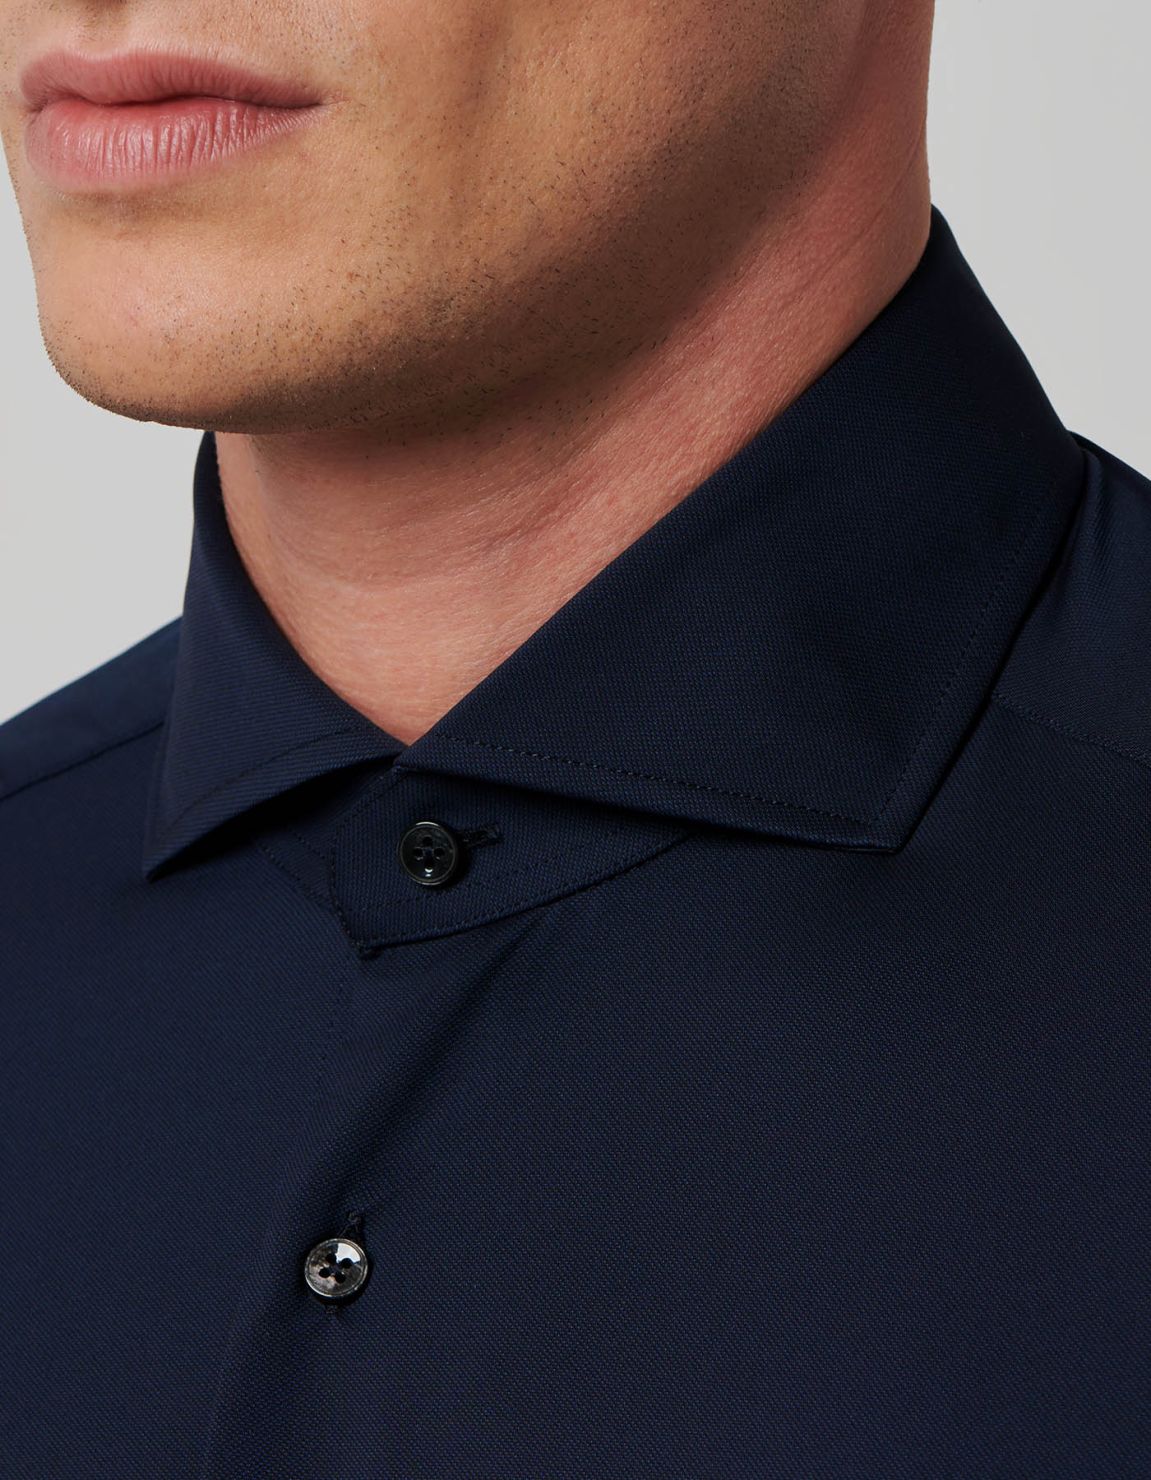 Navy Blue Textured Solid colour Shirt Collar cutaway Tailor Custom Fit 2